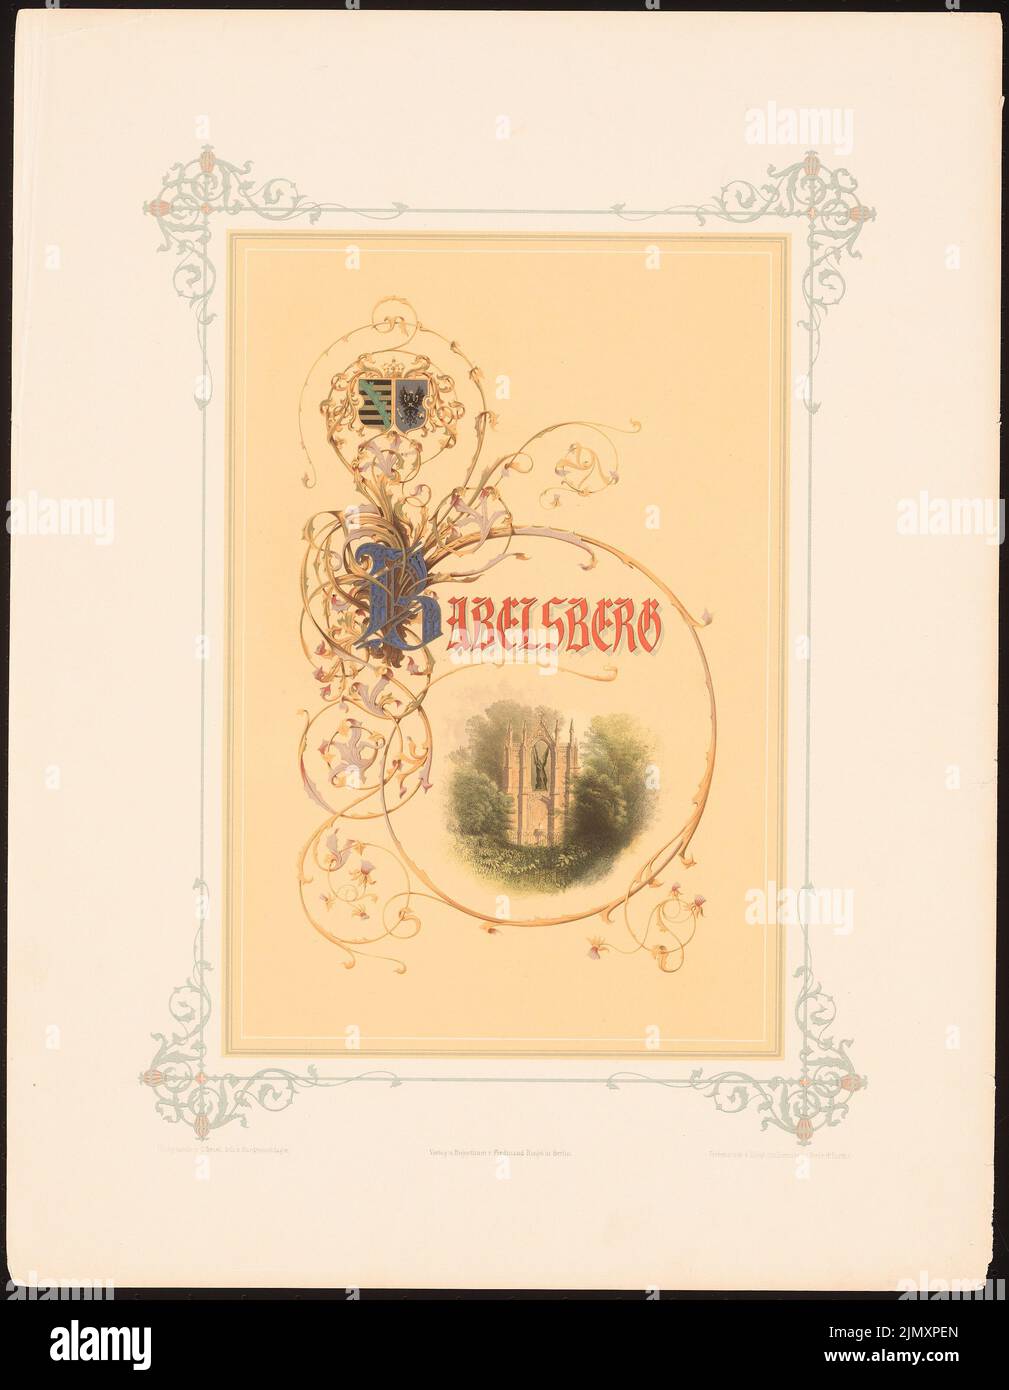 Graeb Carl (1816-1884), Babelsberg Castle, Potsdam (1860-1860): Titleblatt, perspective view. Lithograph colored on paper, 58.5 x 45.4 cm (including scan edges) Stock Photo